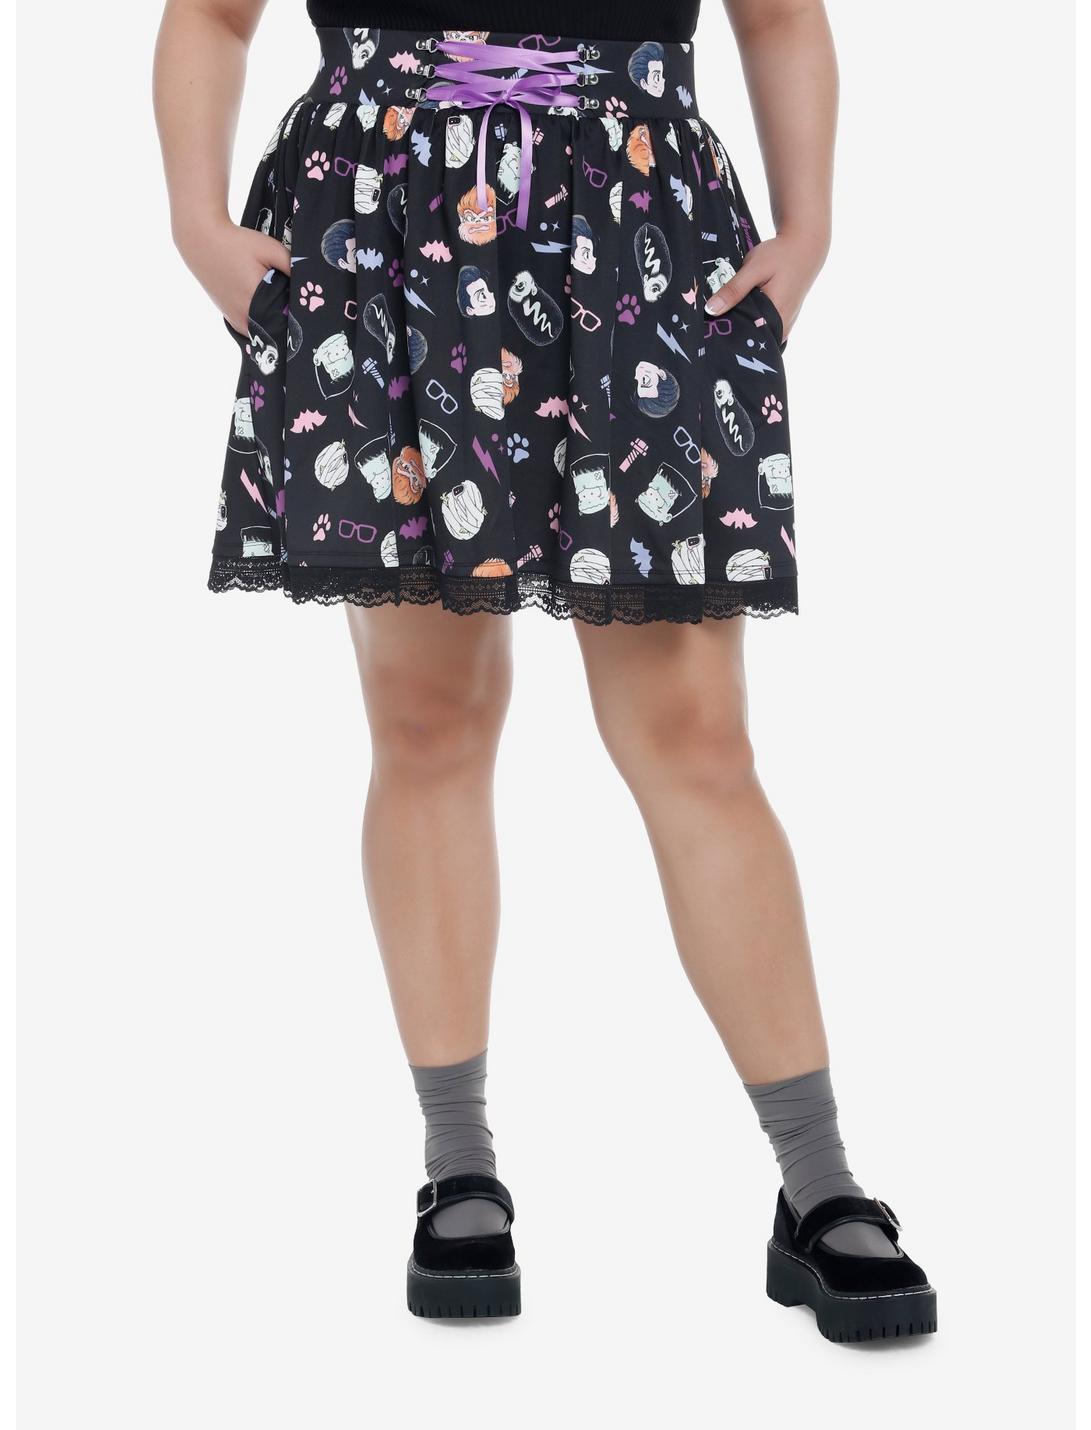 Universal Monsters Chibi Lace-Up Skirt Plus Size, MULTI, hi-res